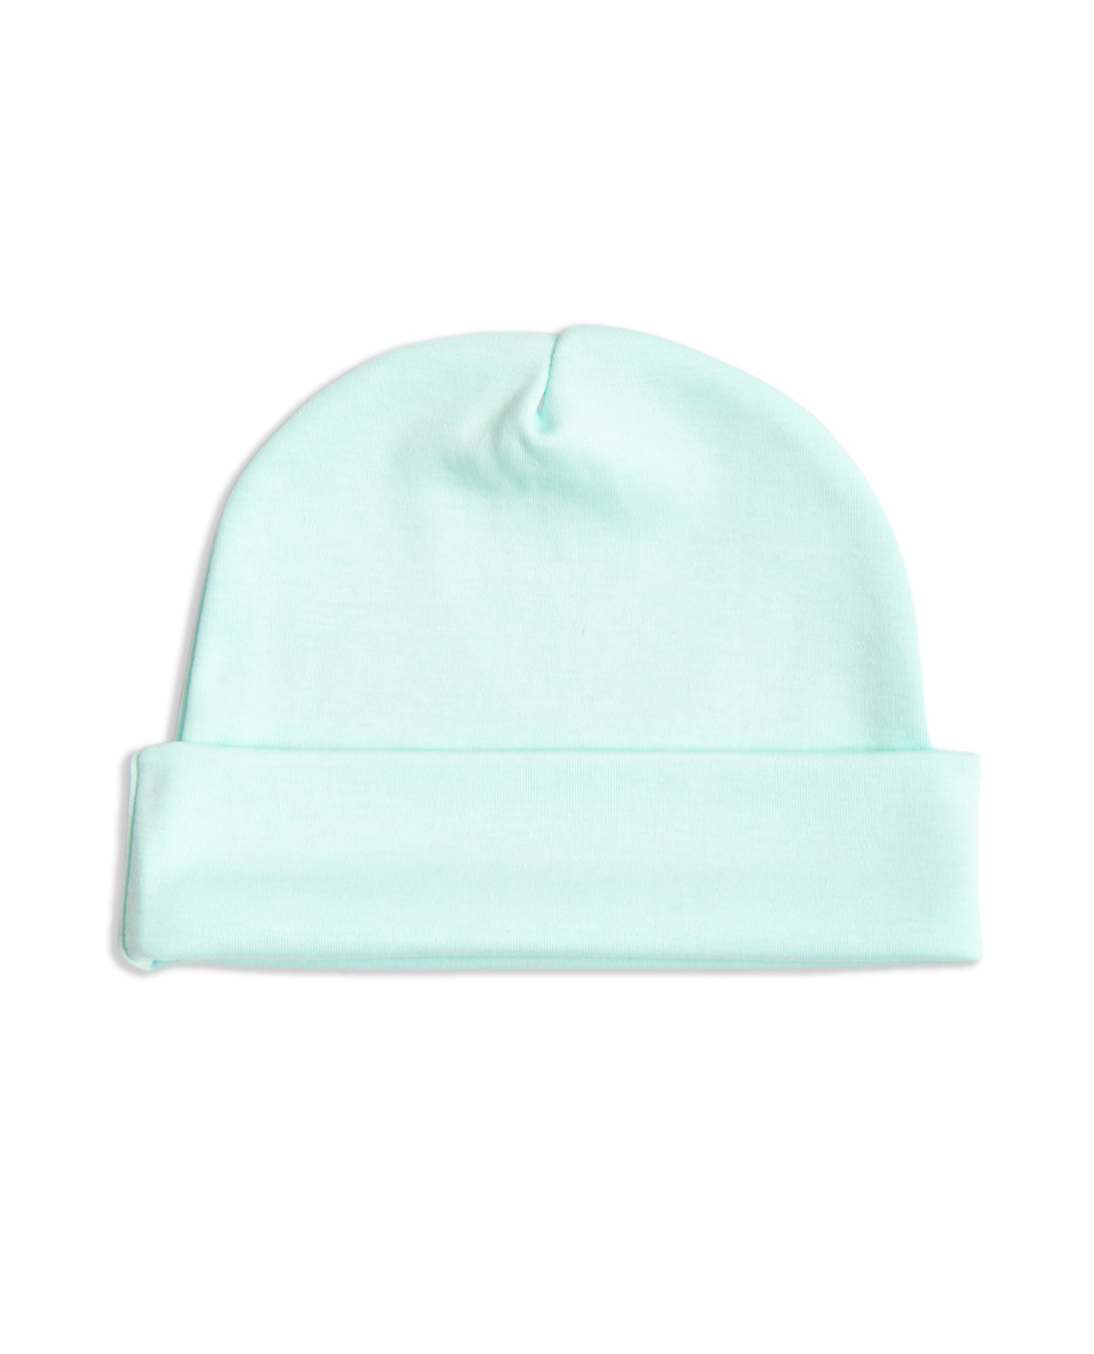 Mint Newborn Hat in Pima Cotton